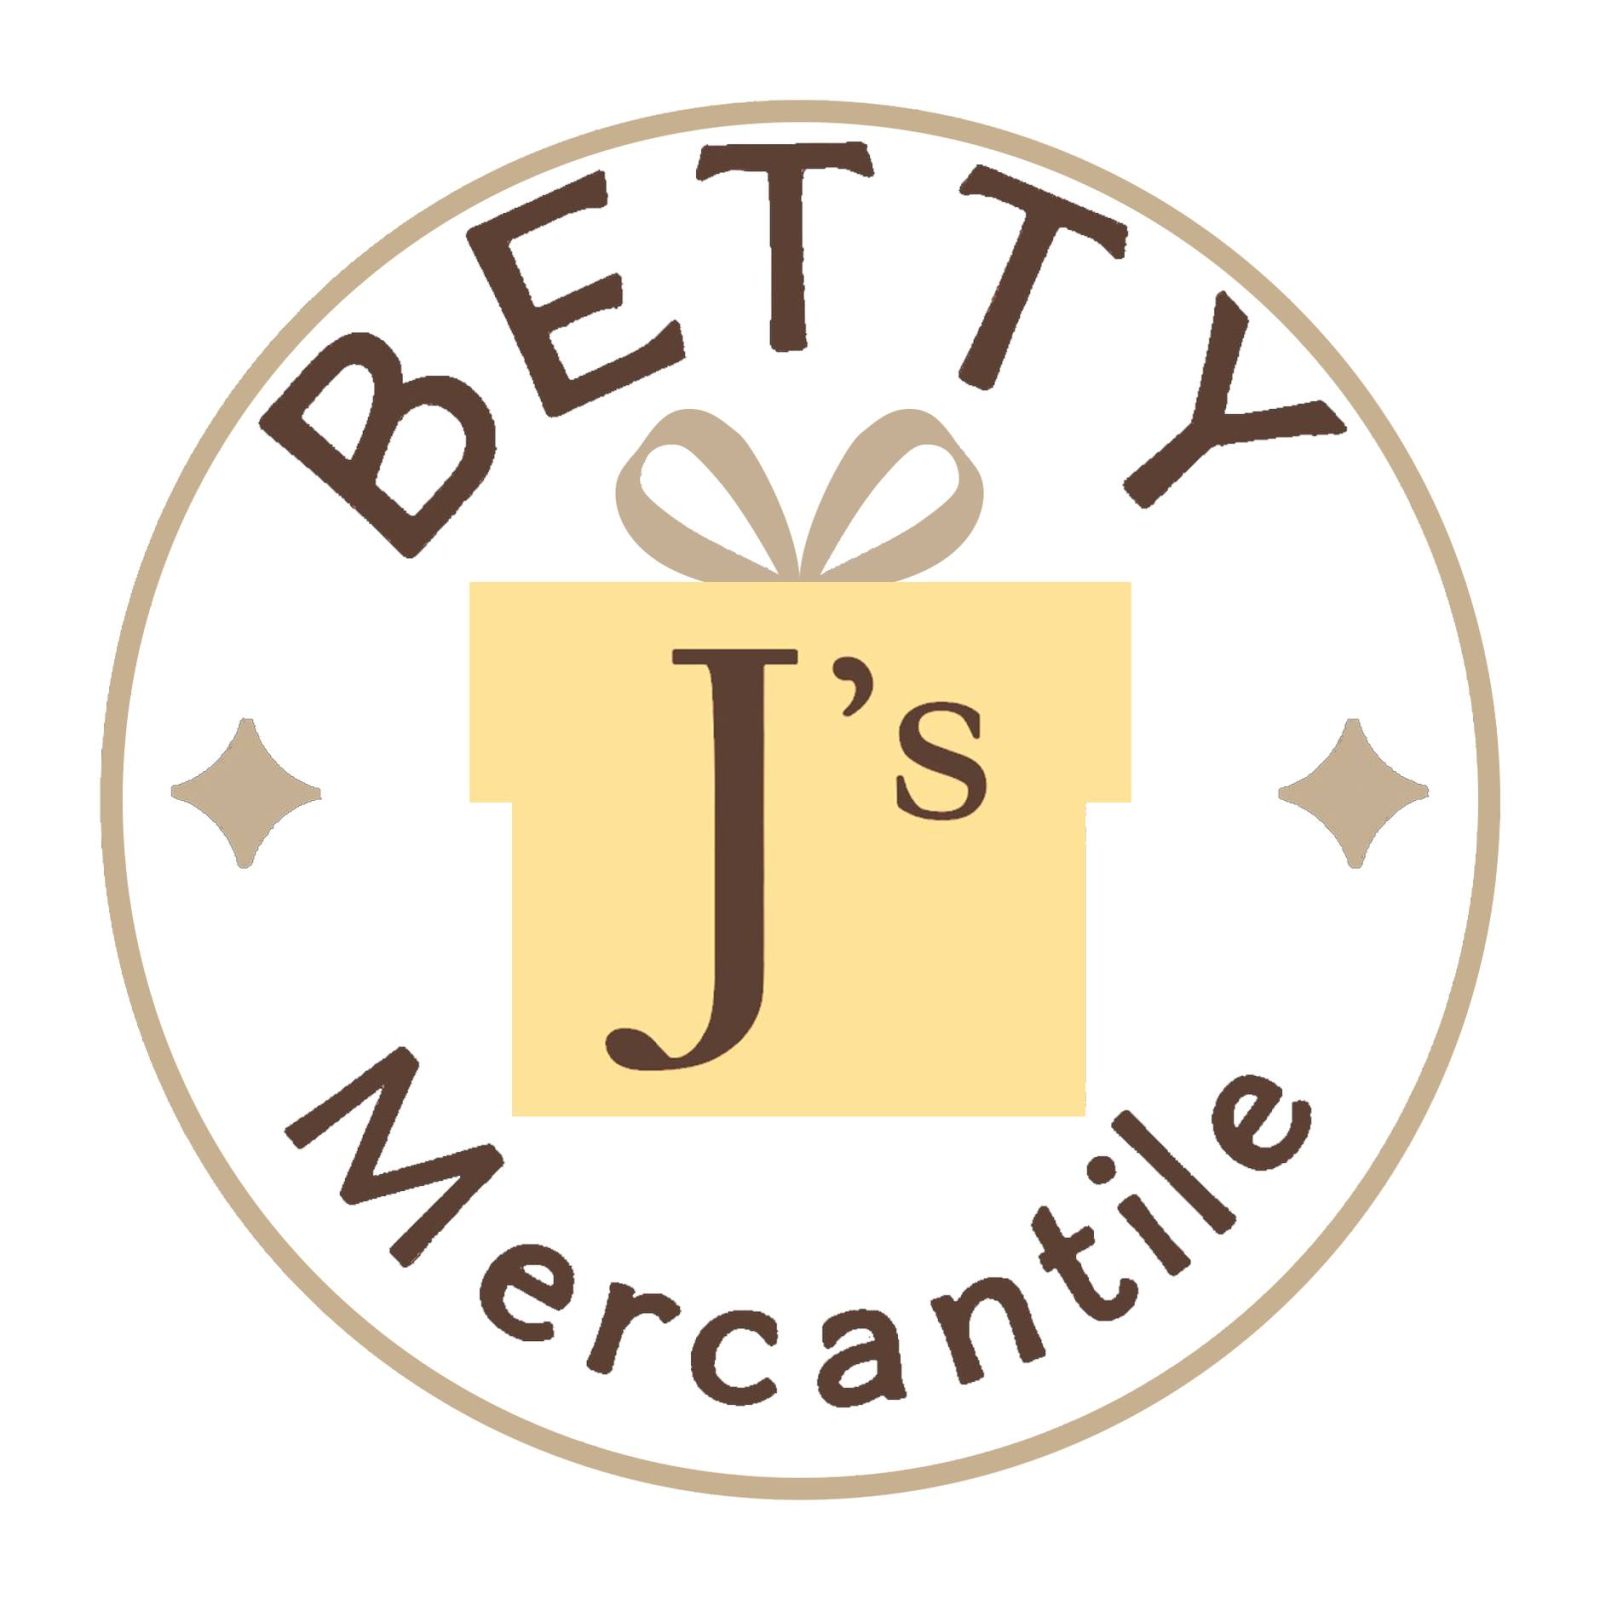 Betty J’s Mercantile's Image